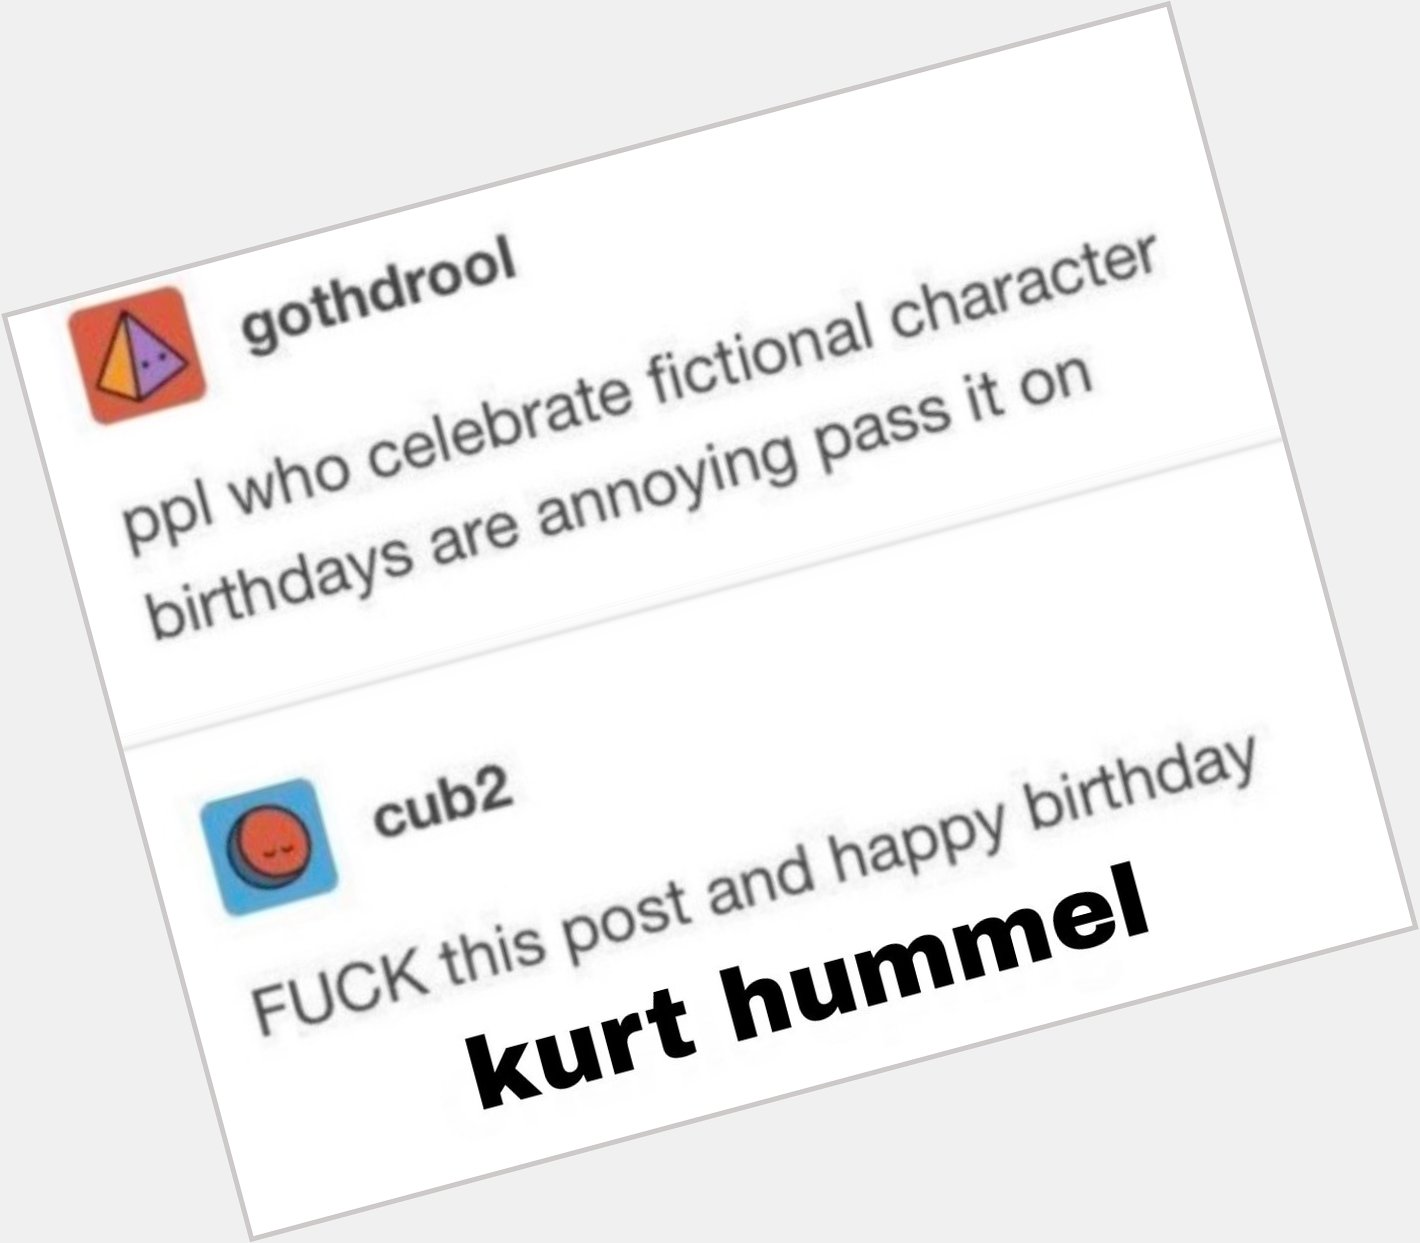 Happy birthday kurt hummel !!!! 